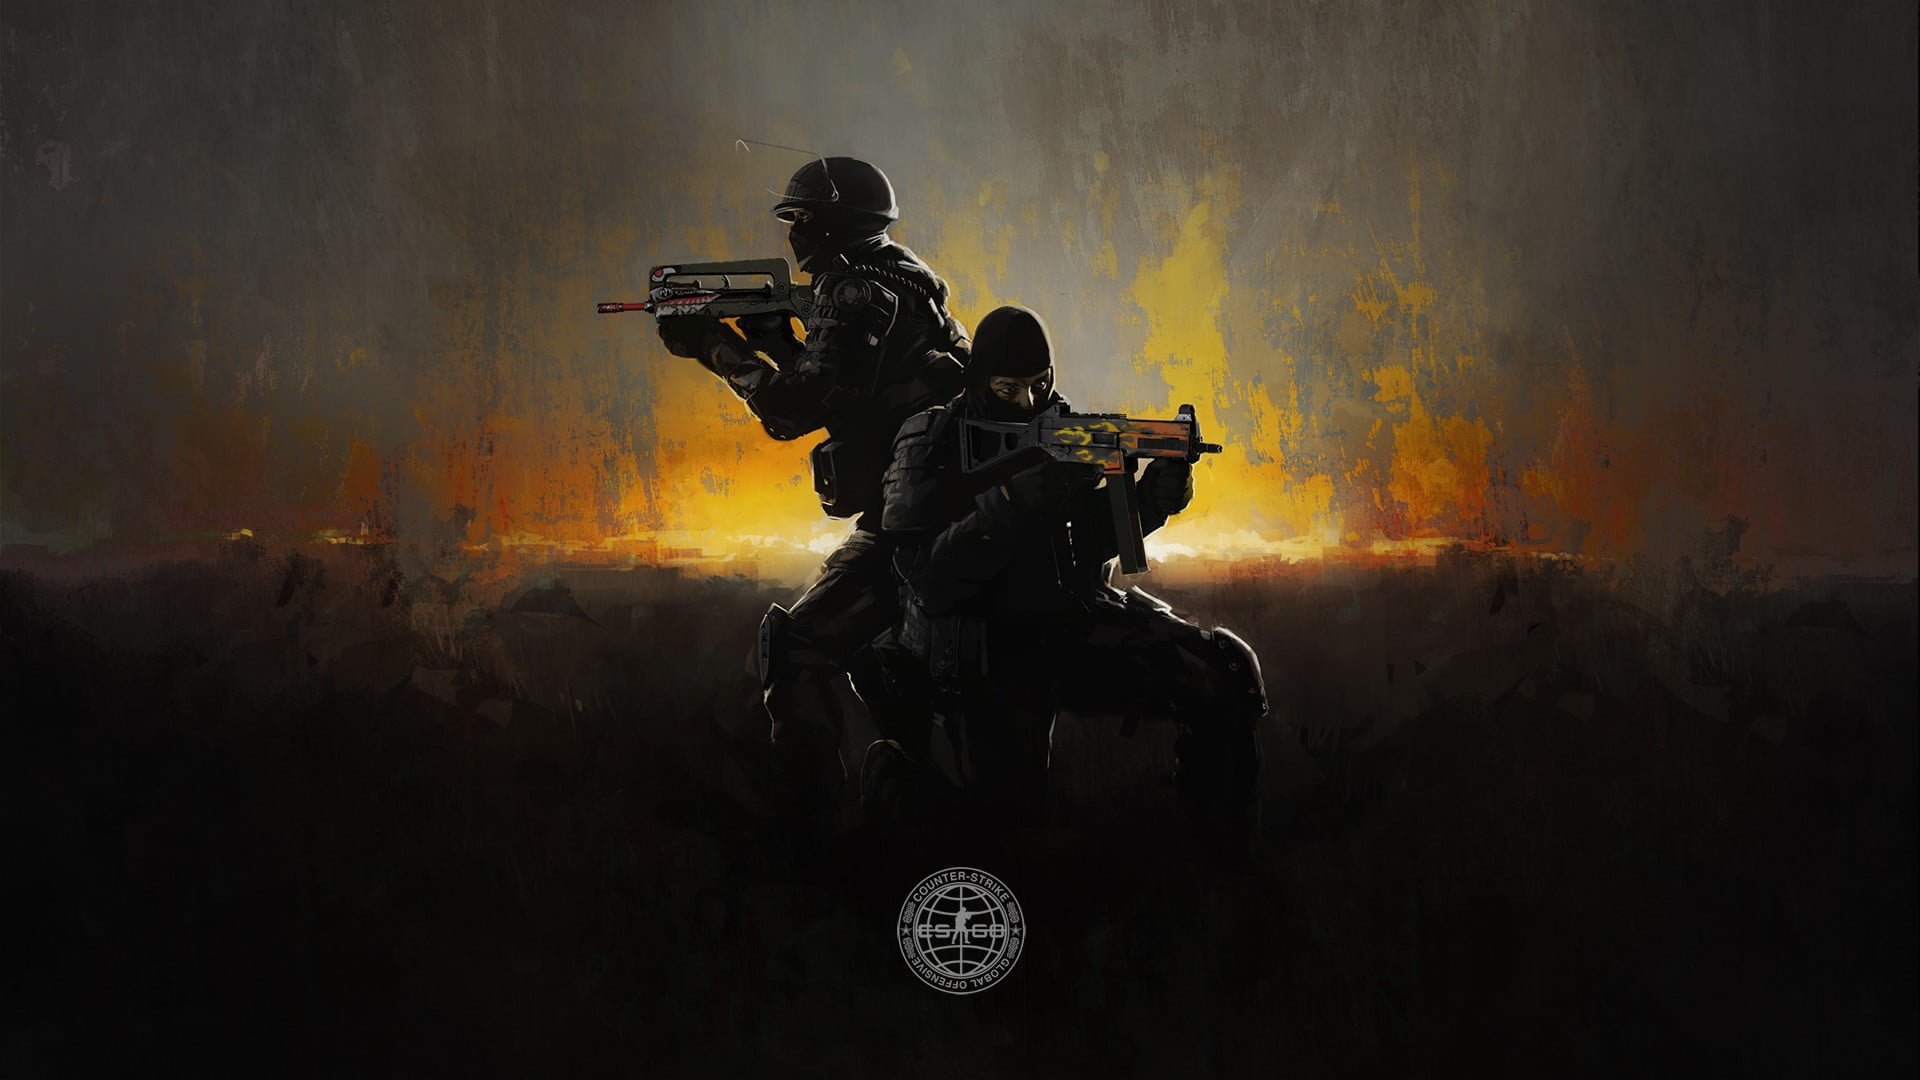 Counter Strike wallpaper